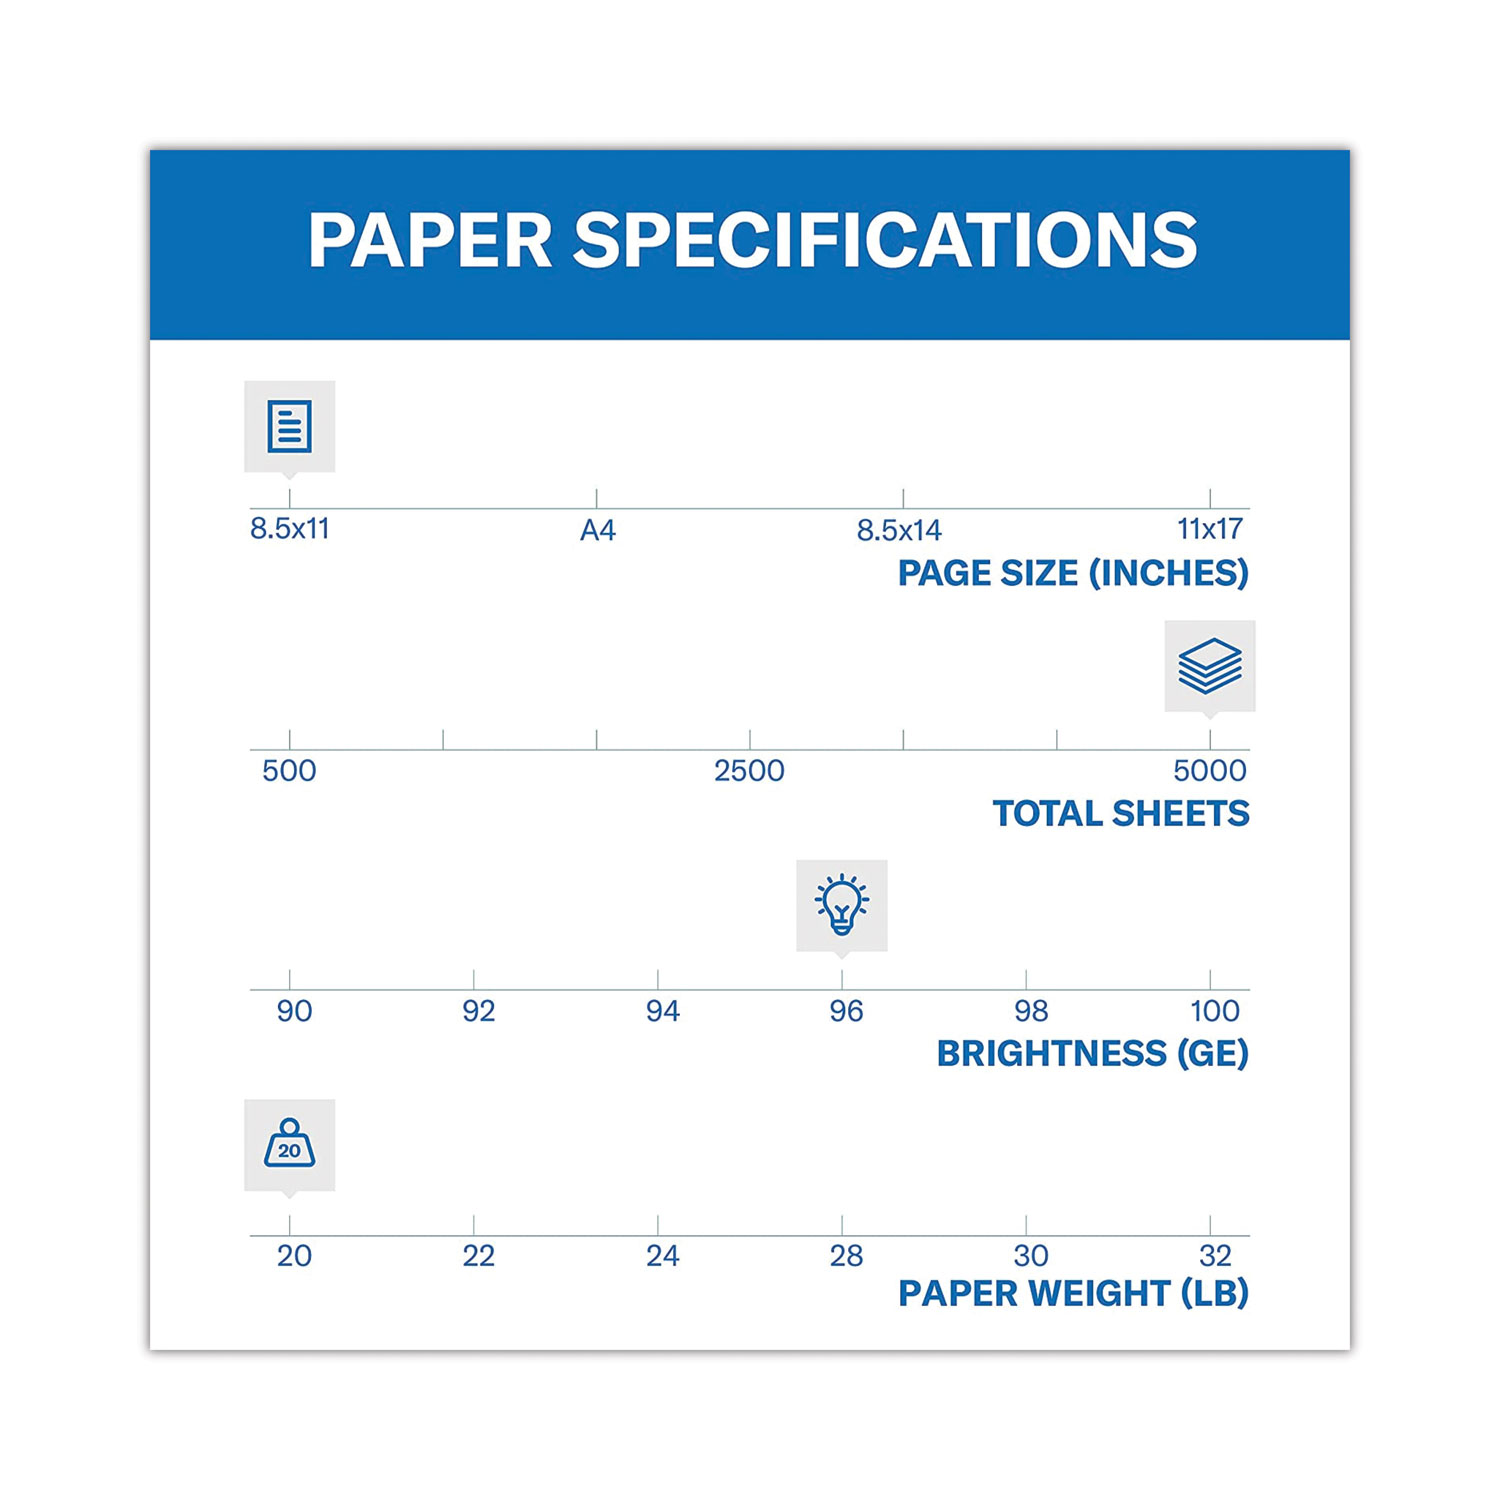 Multipurpose Copy Paper, 92 Bright, 20 lb, White, 8.5x11, 10 Reams, 5000  Sheet